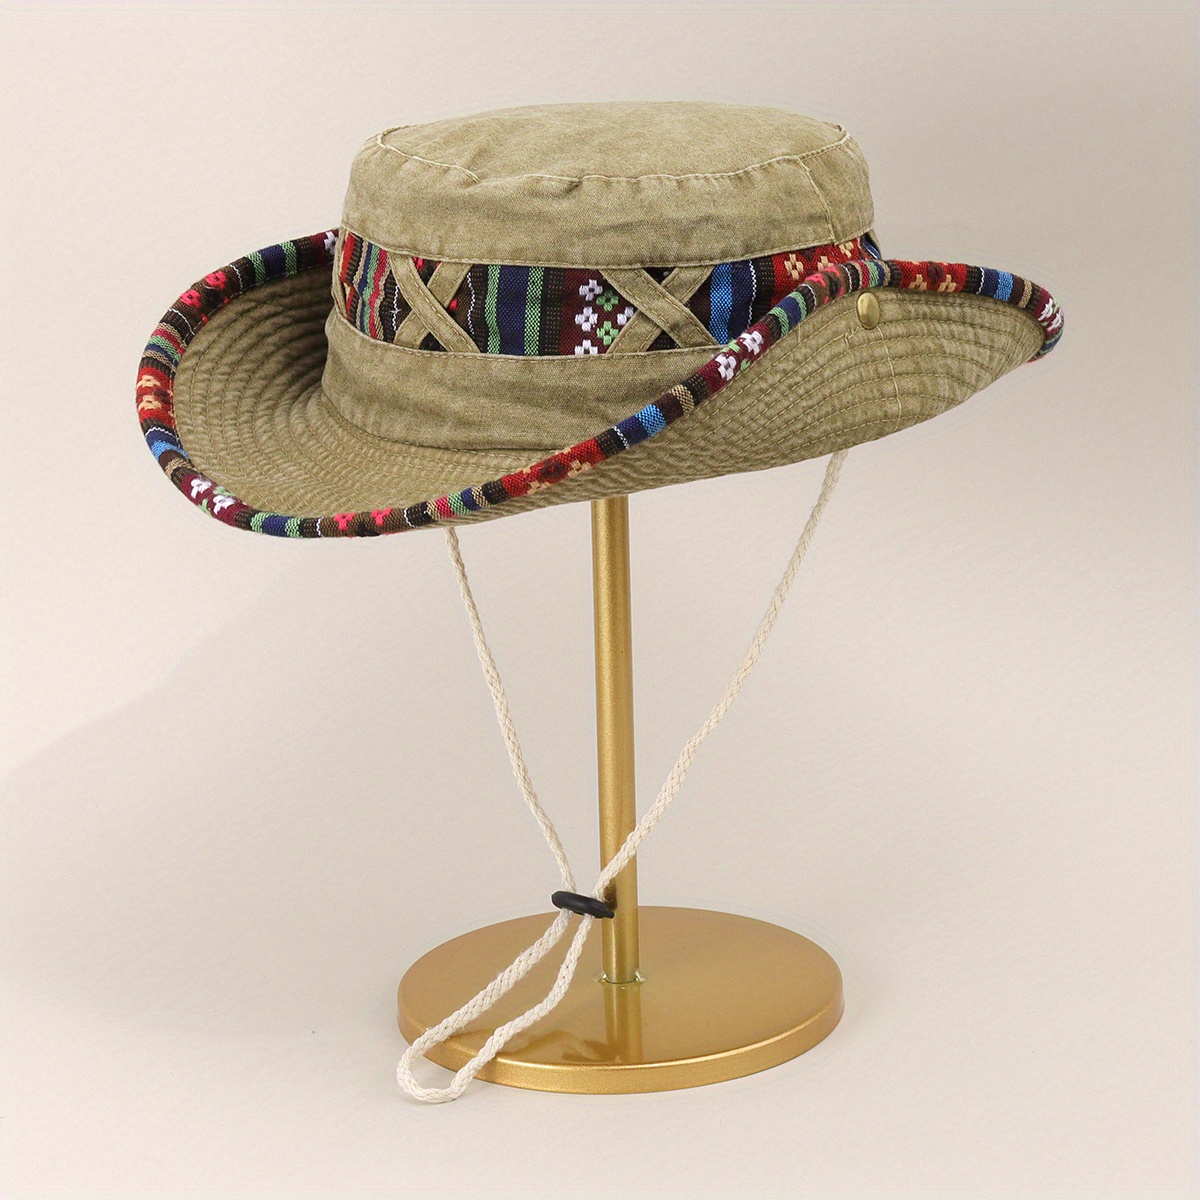 Vintage Distressed Fishing Hat